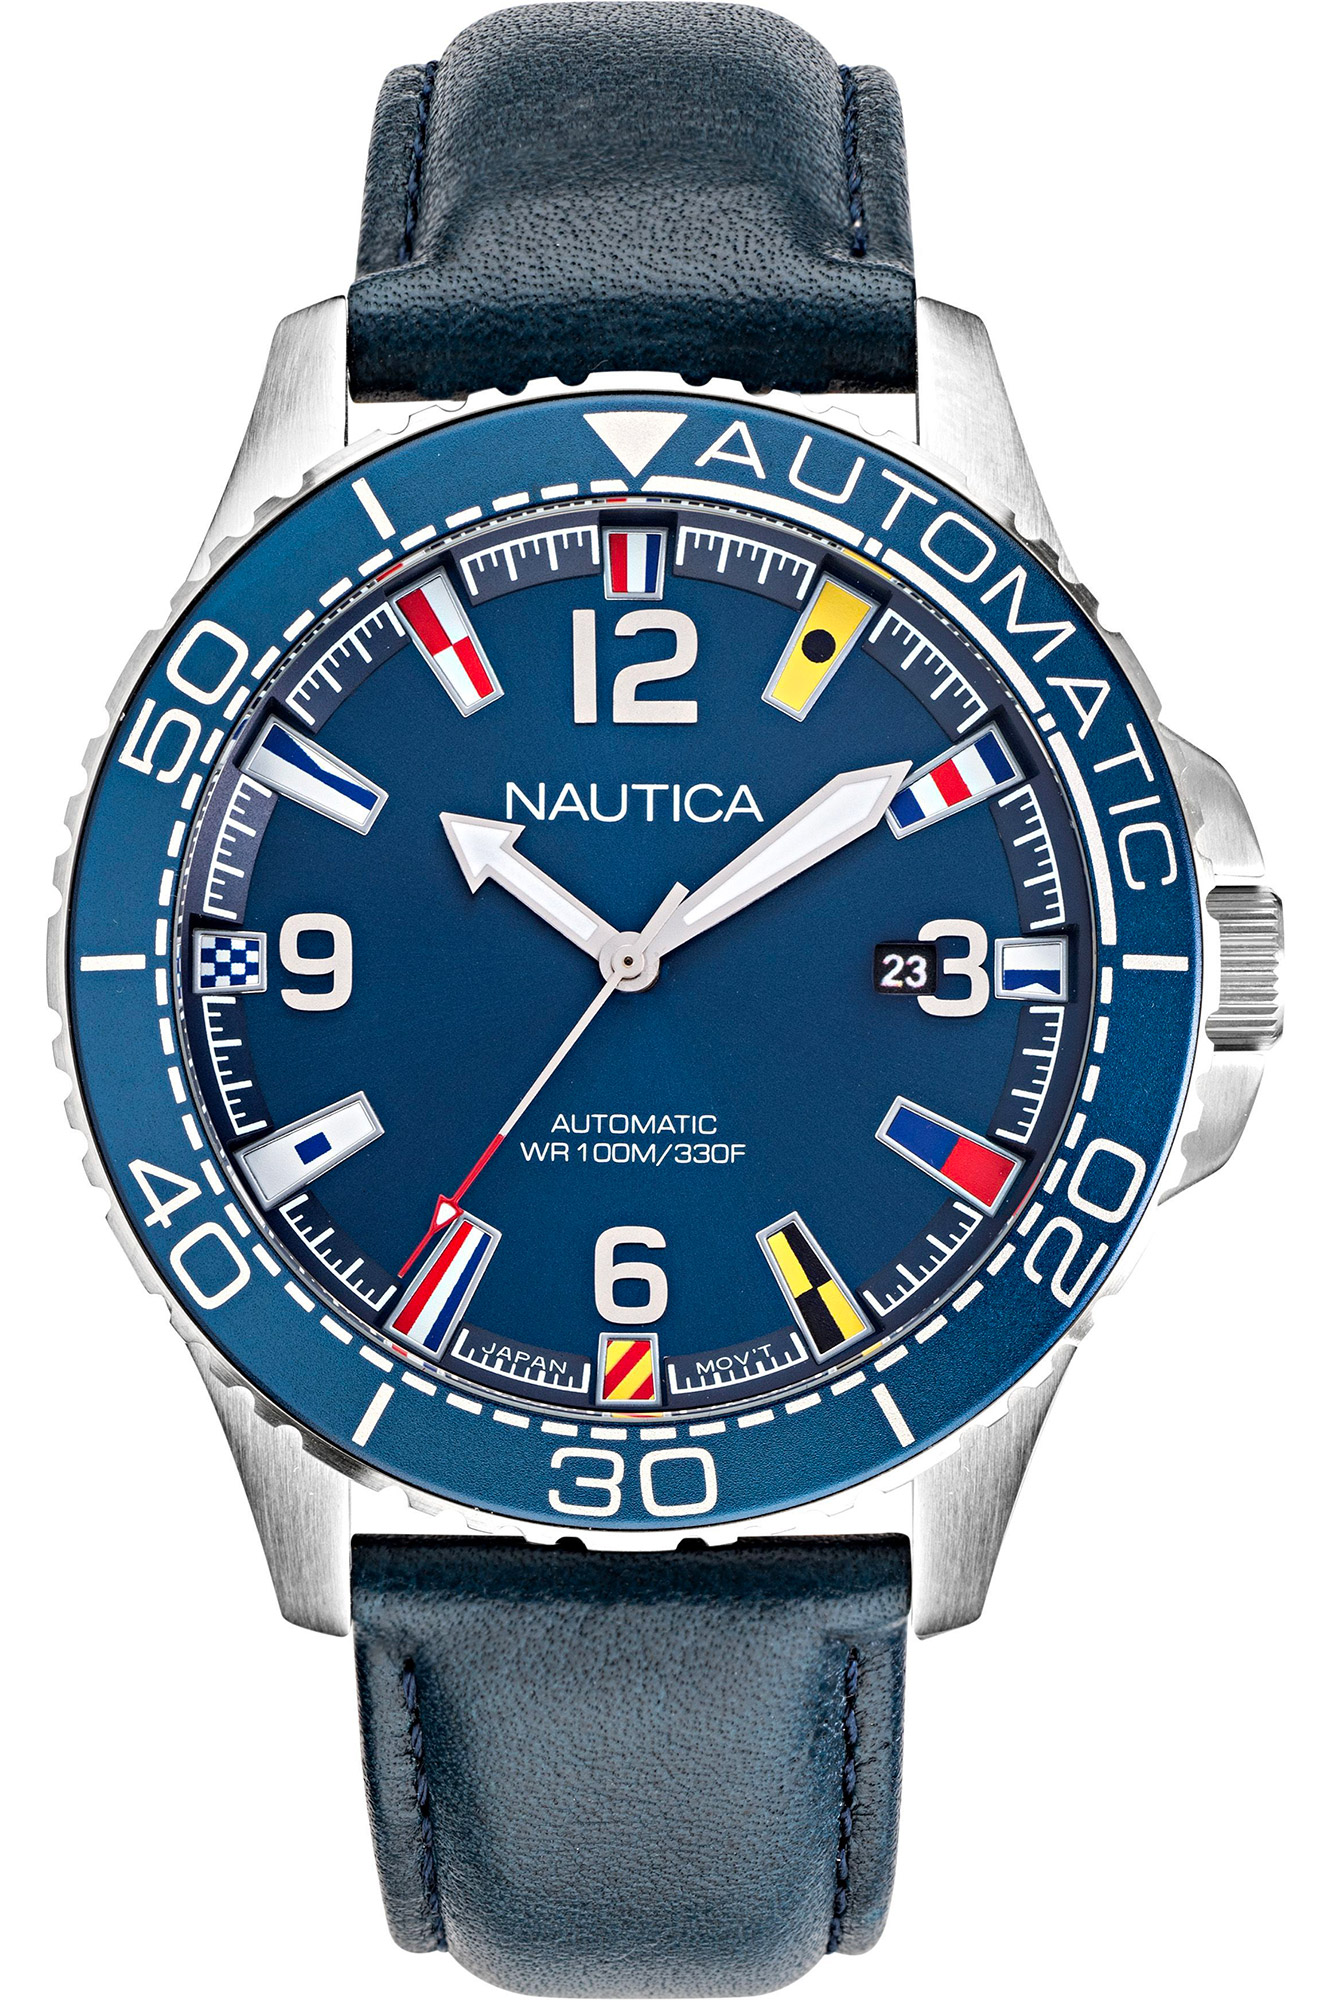 Reloj Nautica napjbf912